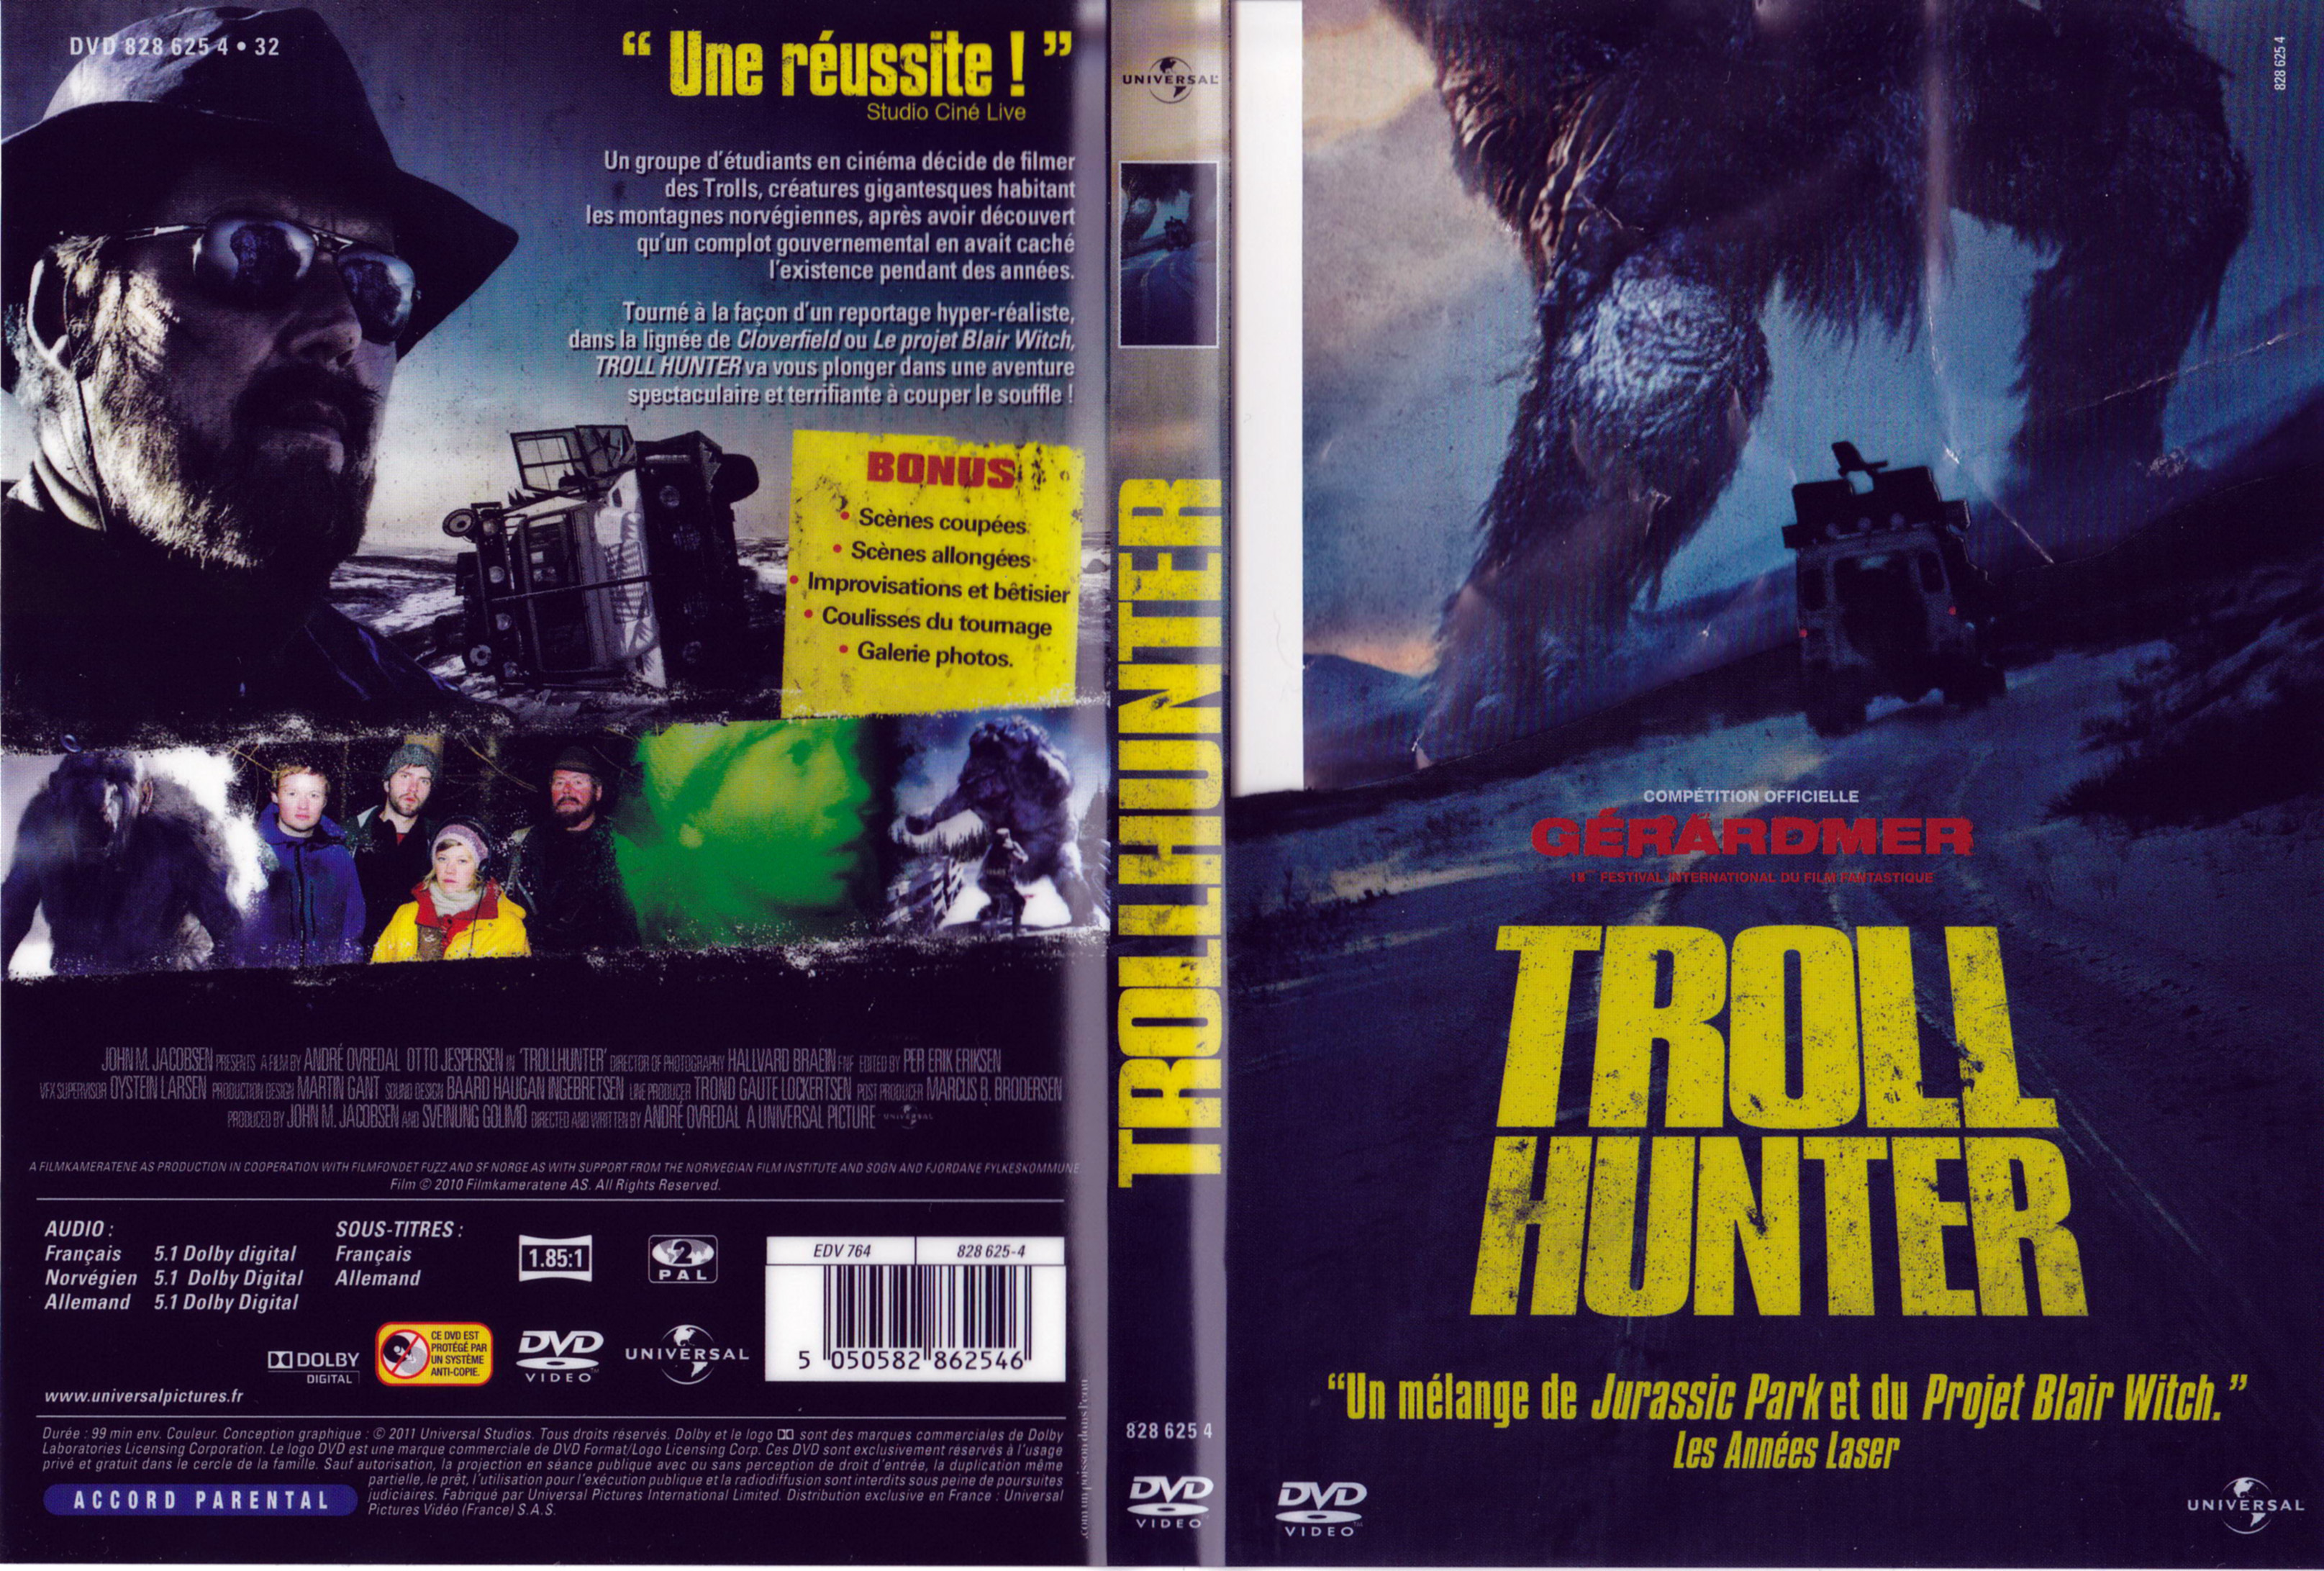 Jaquette DVD Troll hunter